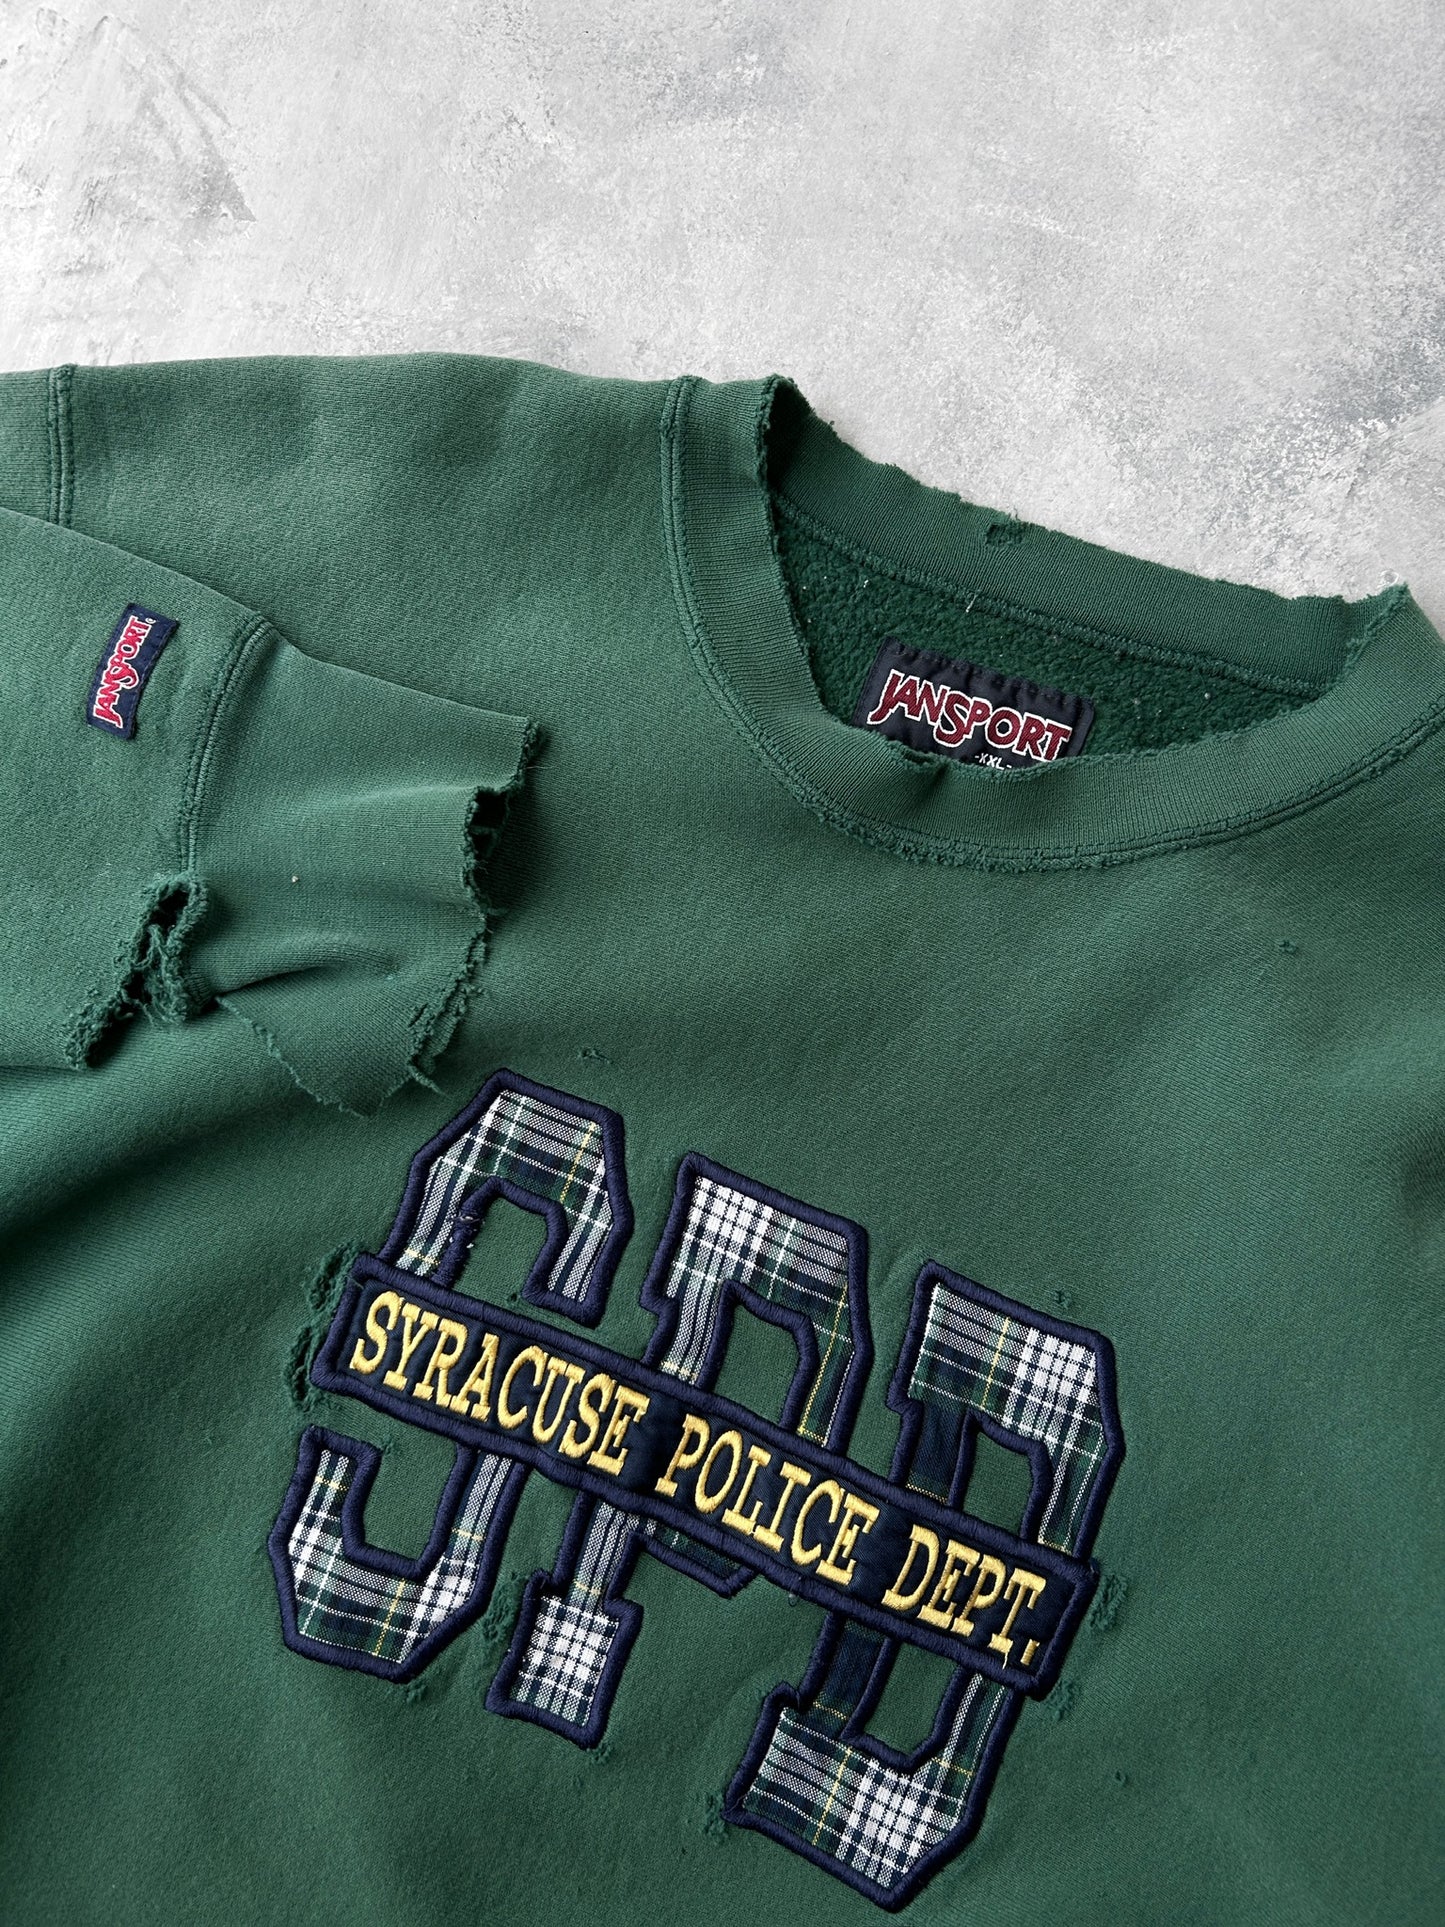 Syracuse Police Department Sweatshirt 90's - XXL